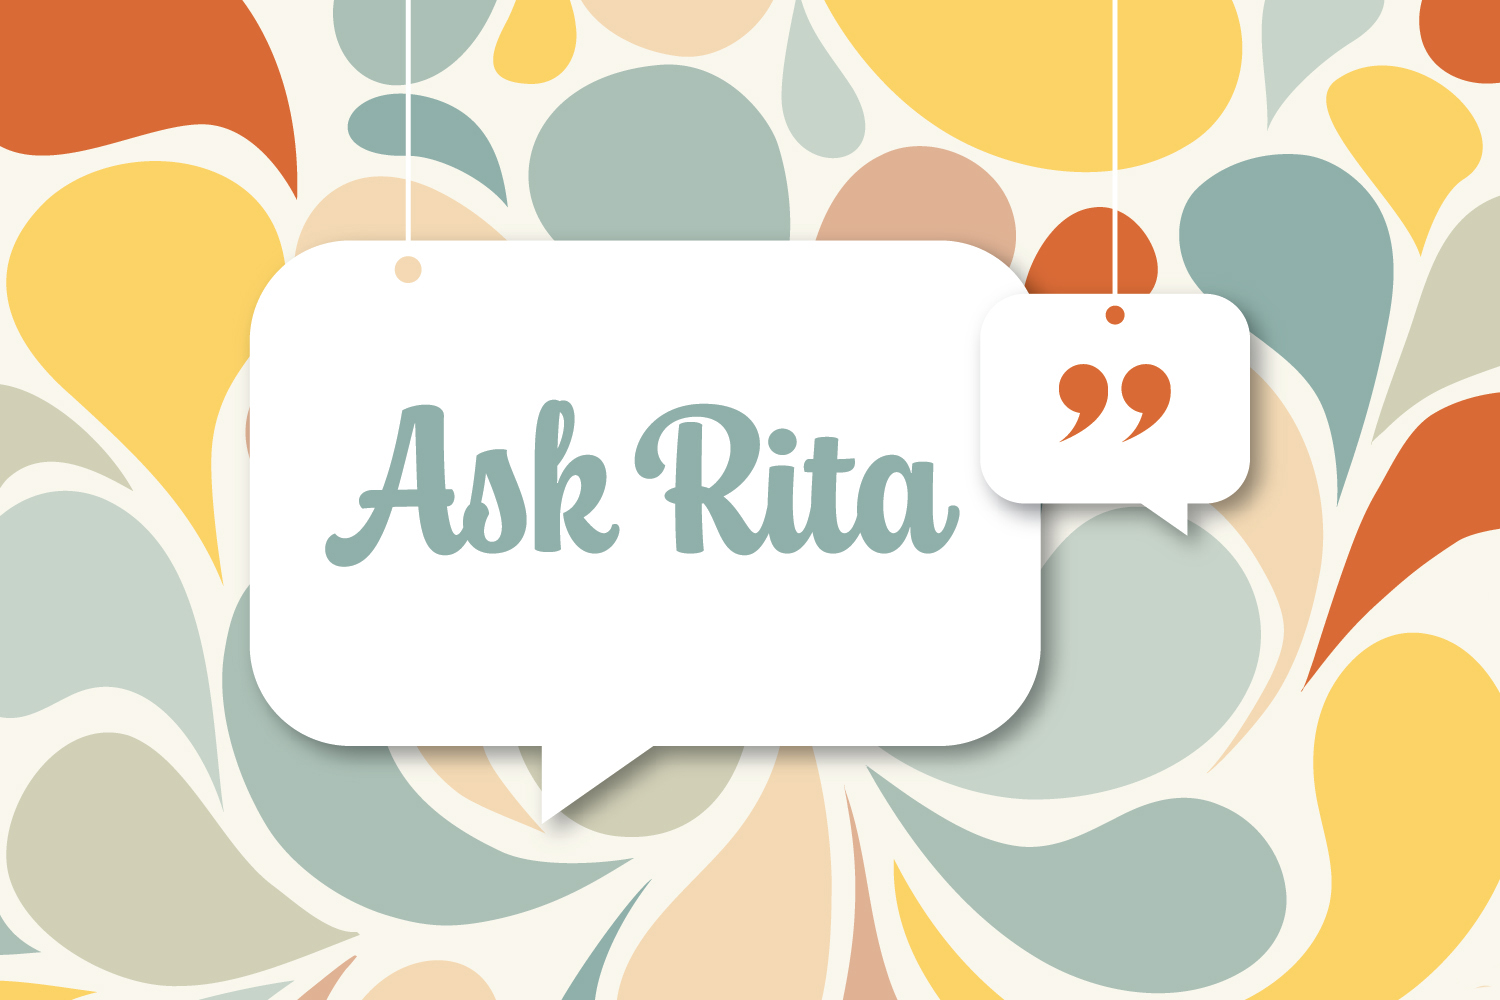 Ask Rita: How Do We Handle A Whistleblower?